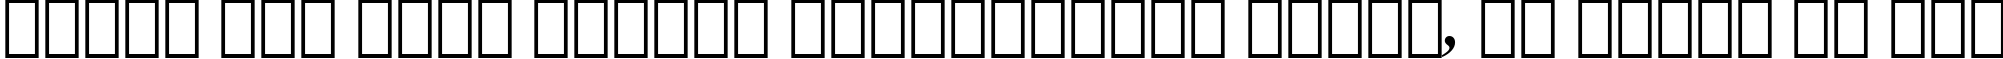 Пример написания шрифтом Dutch 801 Bold Italic BT текста на русском